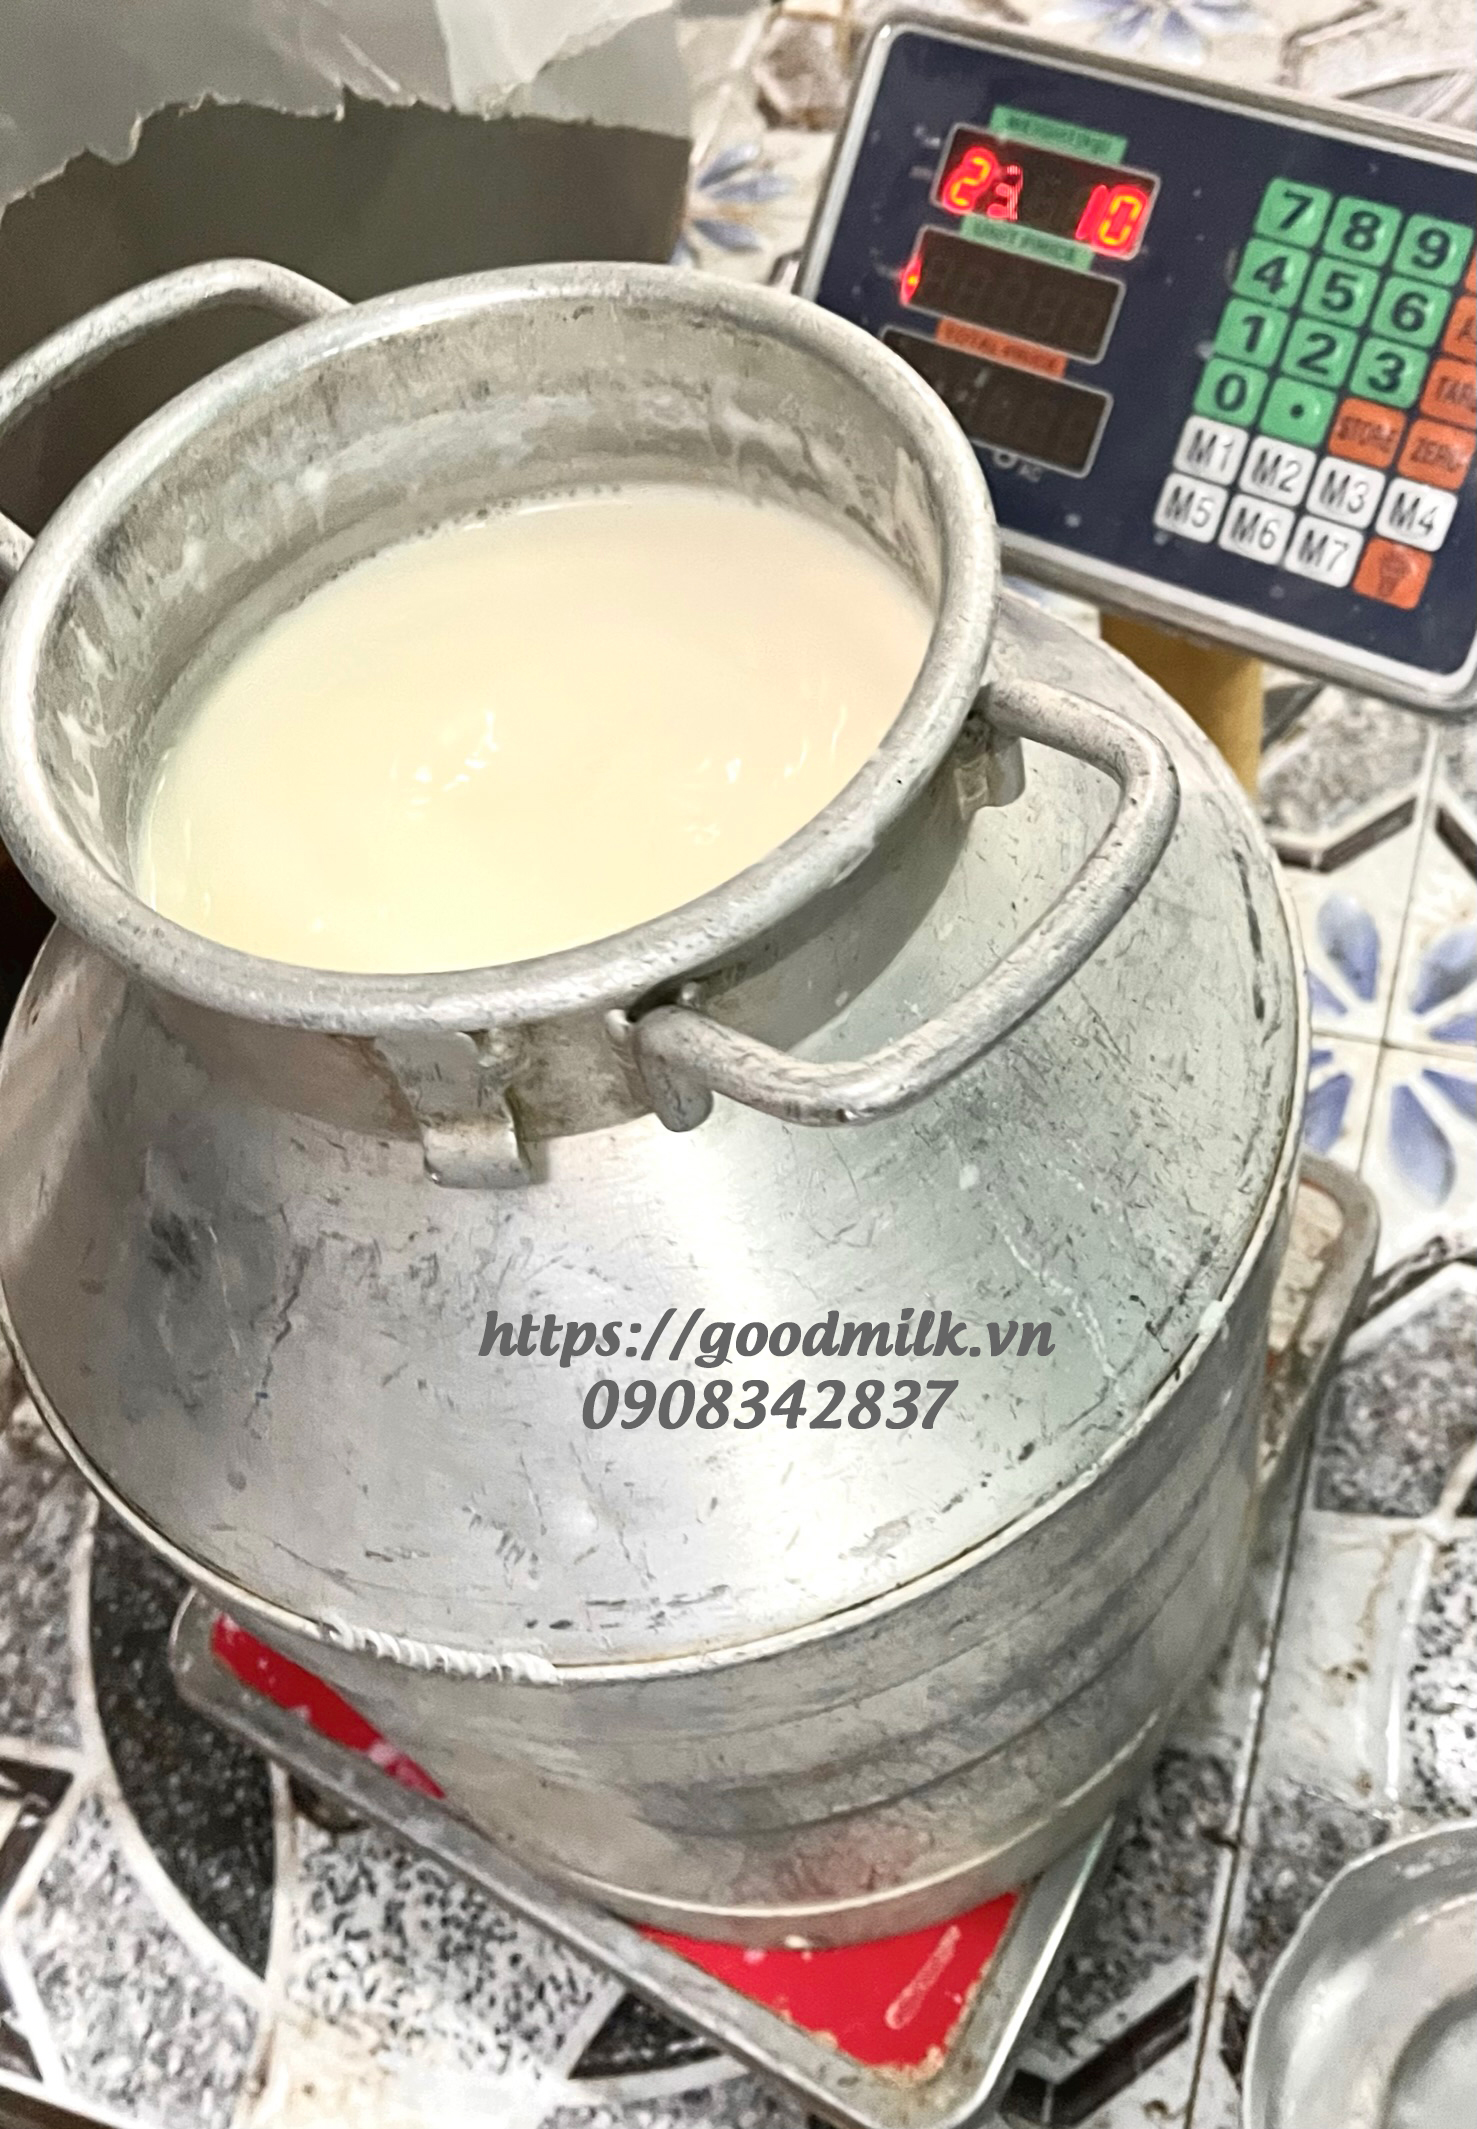 Sữa thô - sữa mới vắt (unpasteurized cow milk)